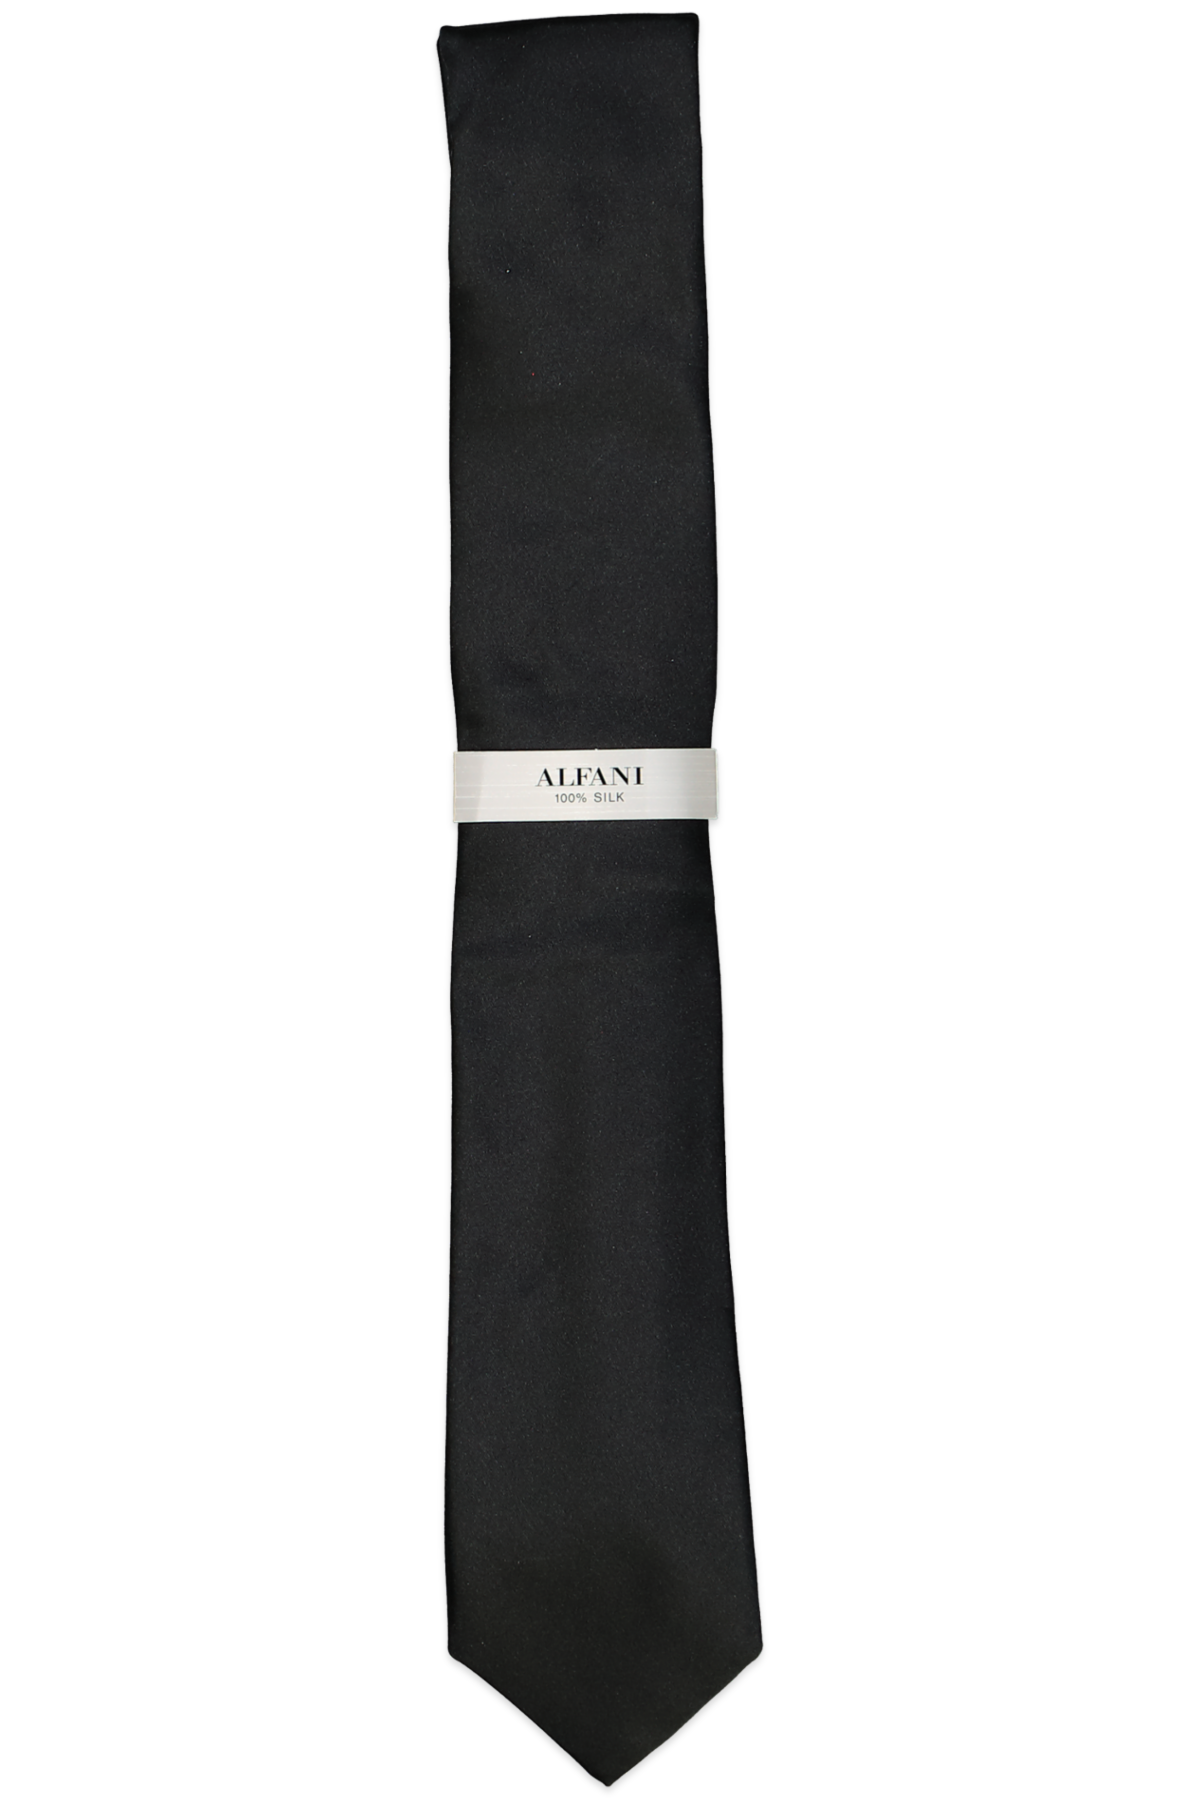 Alfani Satin Solid Slim Silk Tie Black